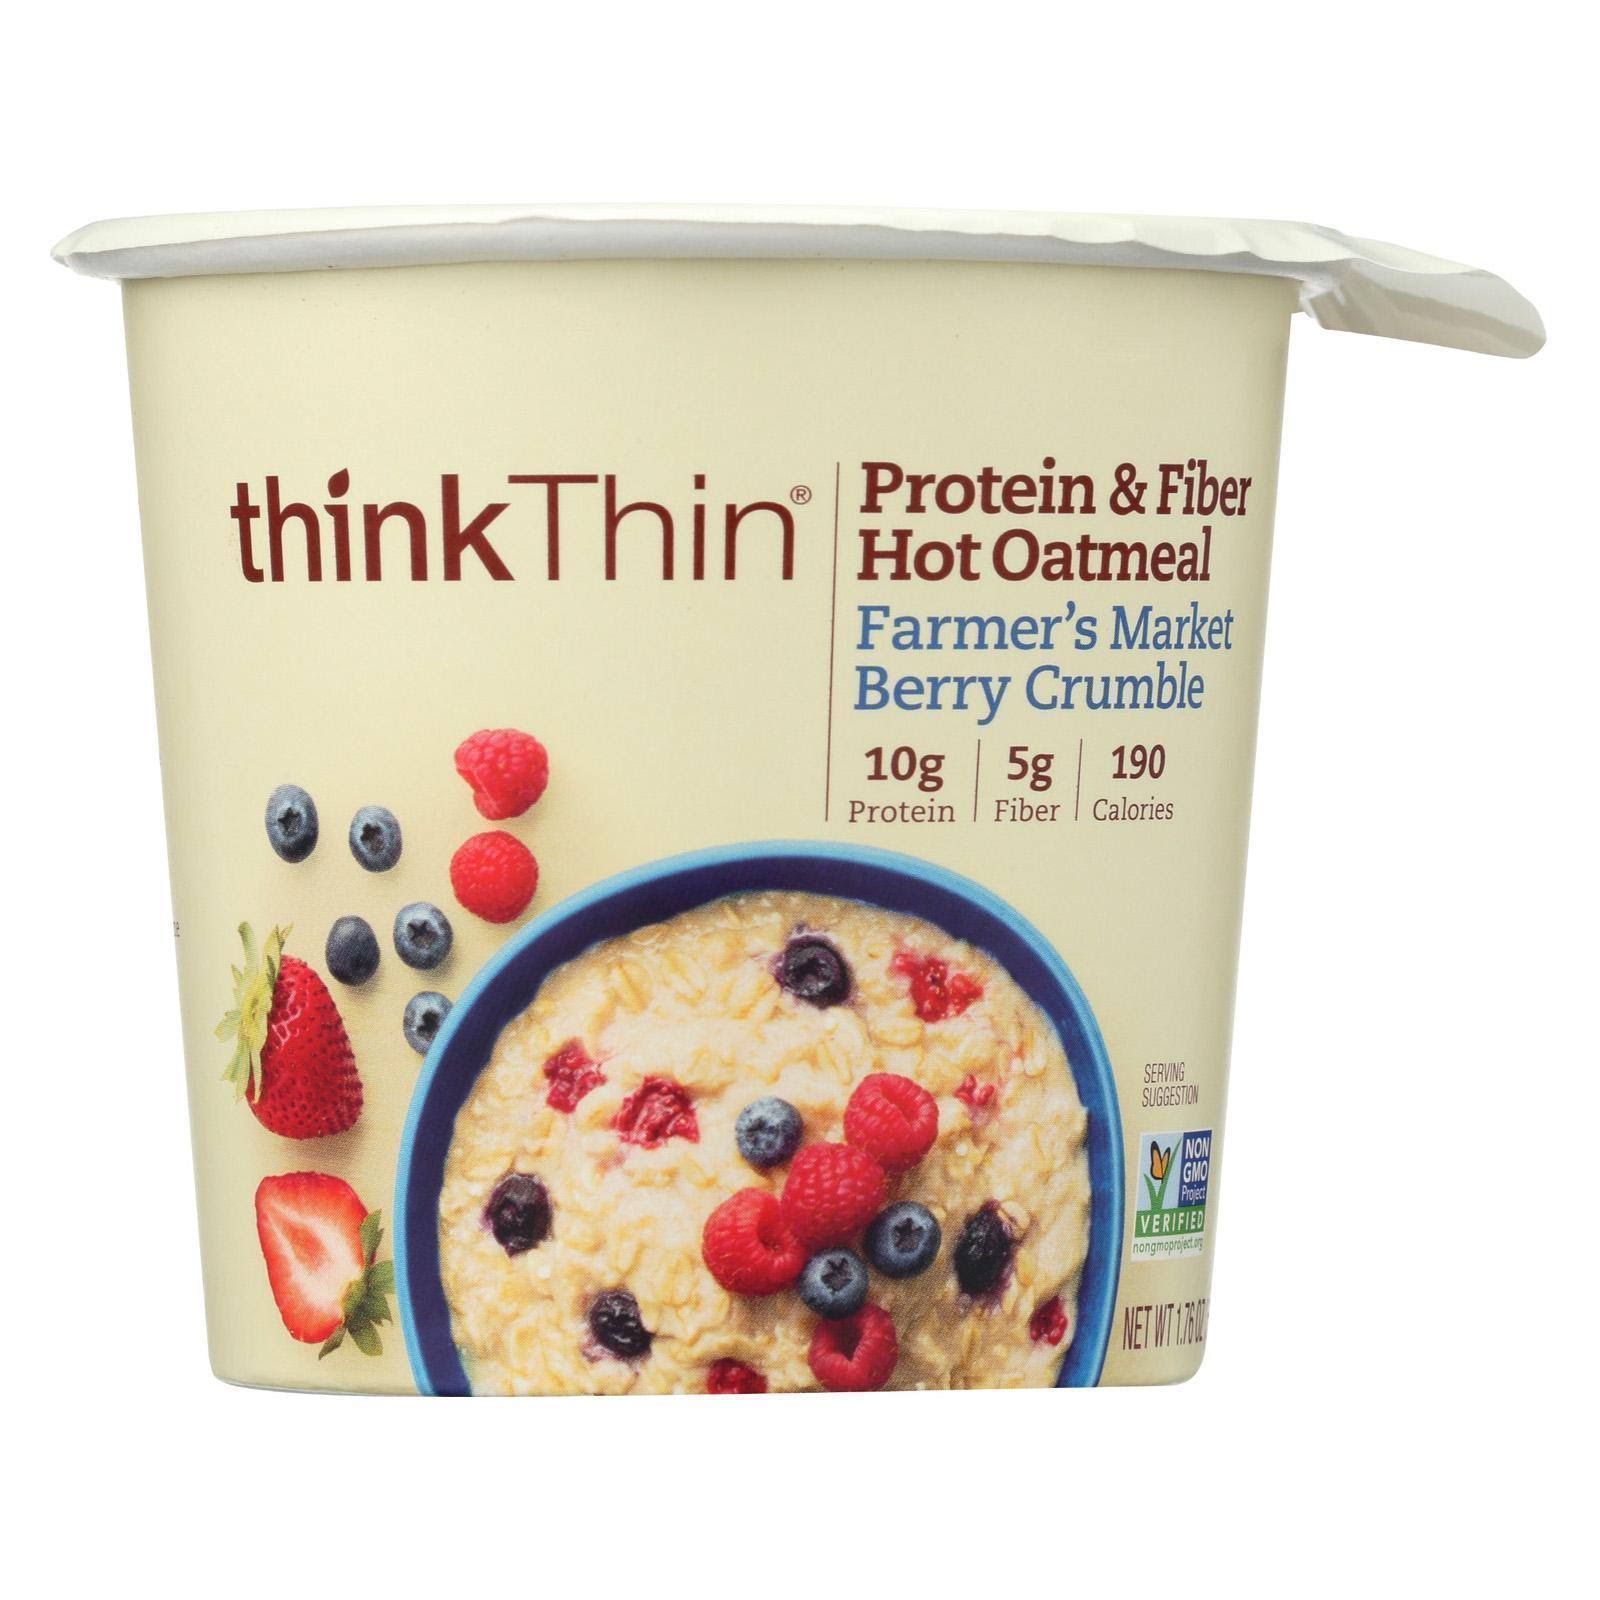 Thinkthin Protein & Fiber Hot Oatmeal Farmer's Market Berry Crumble